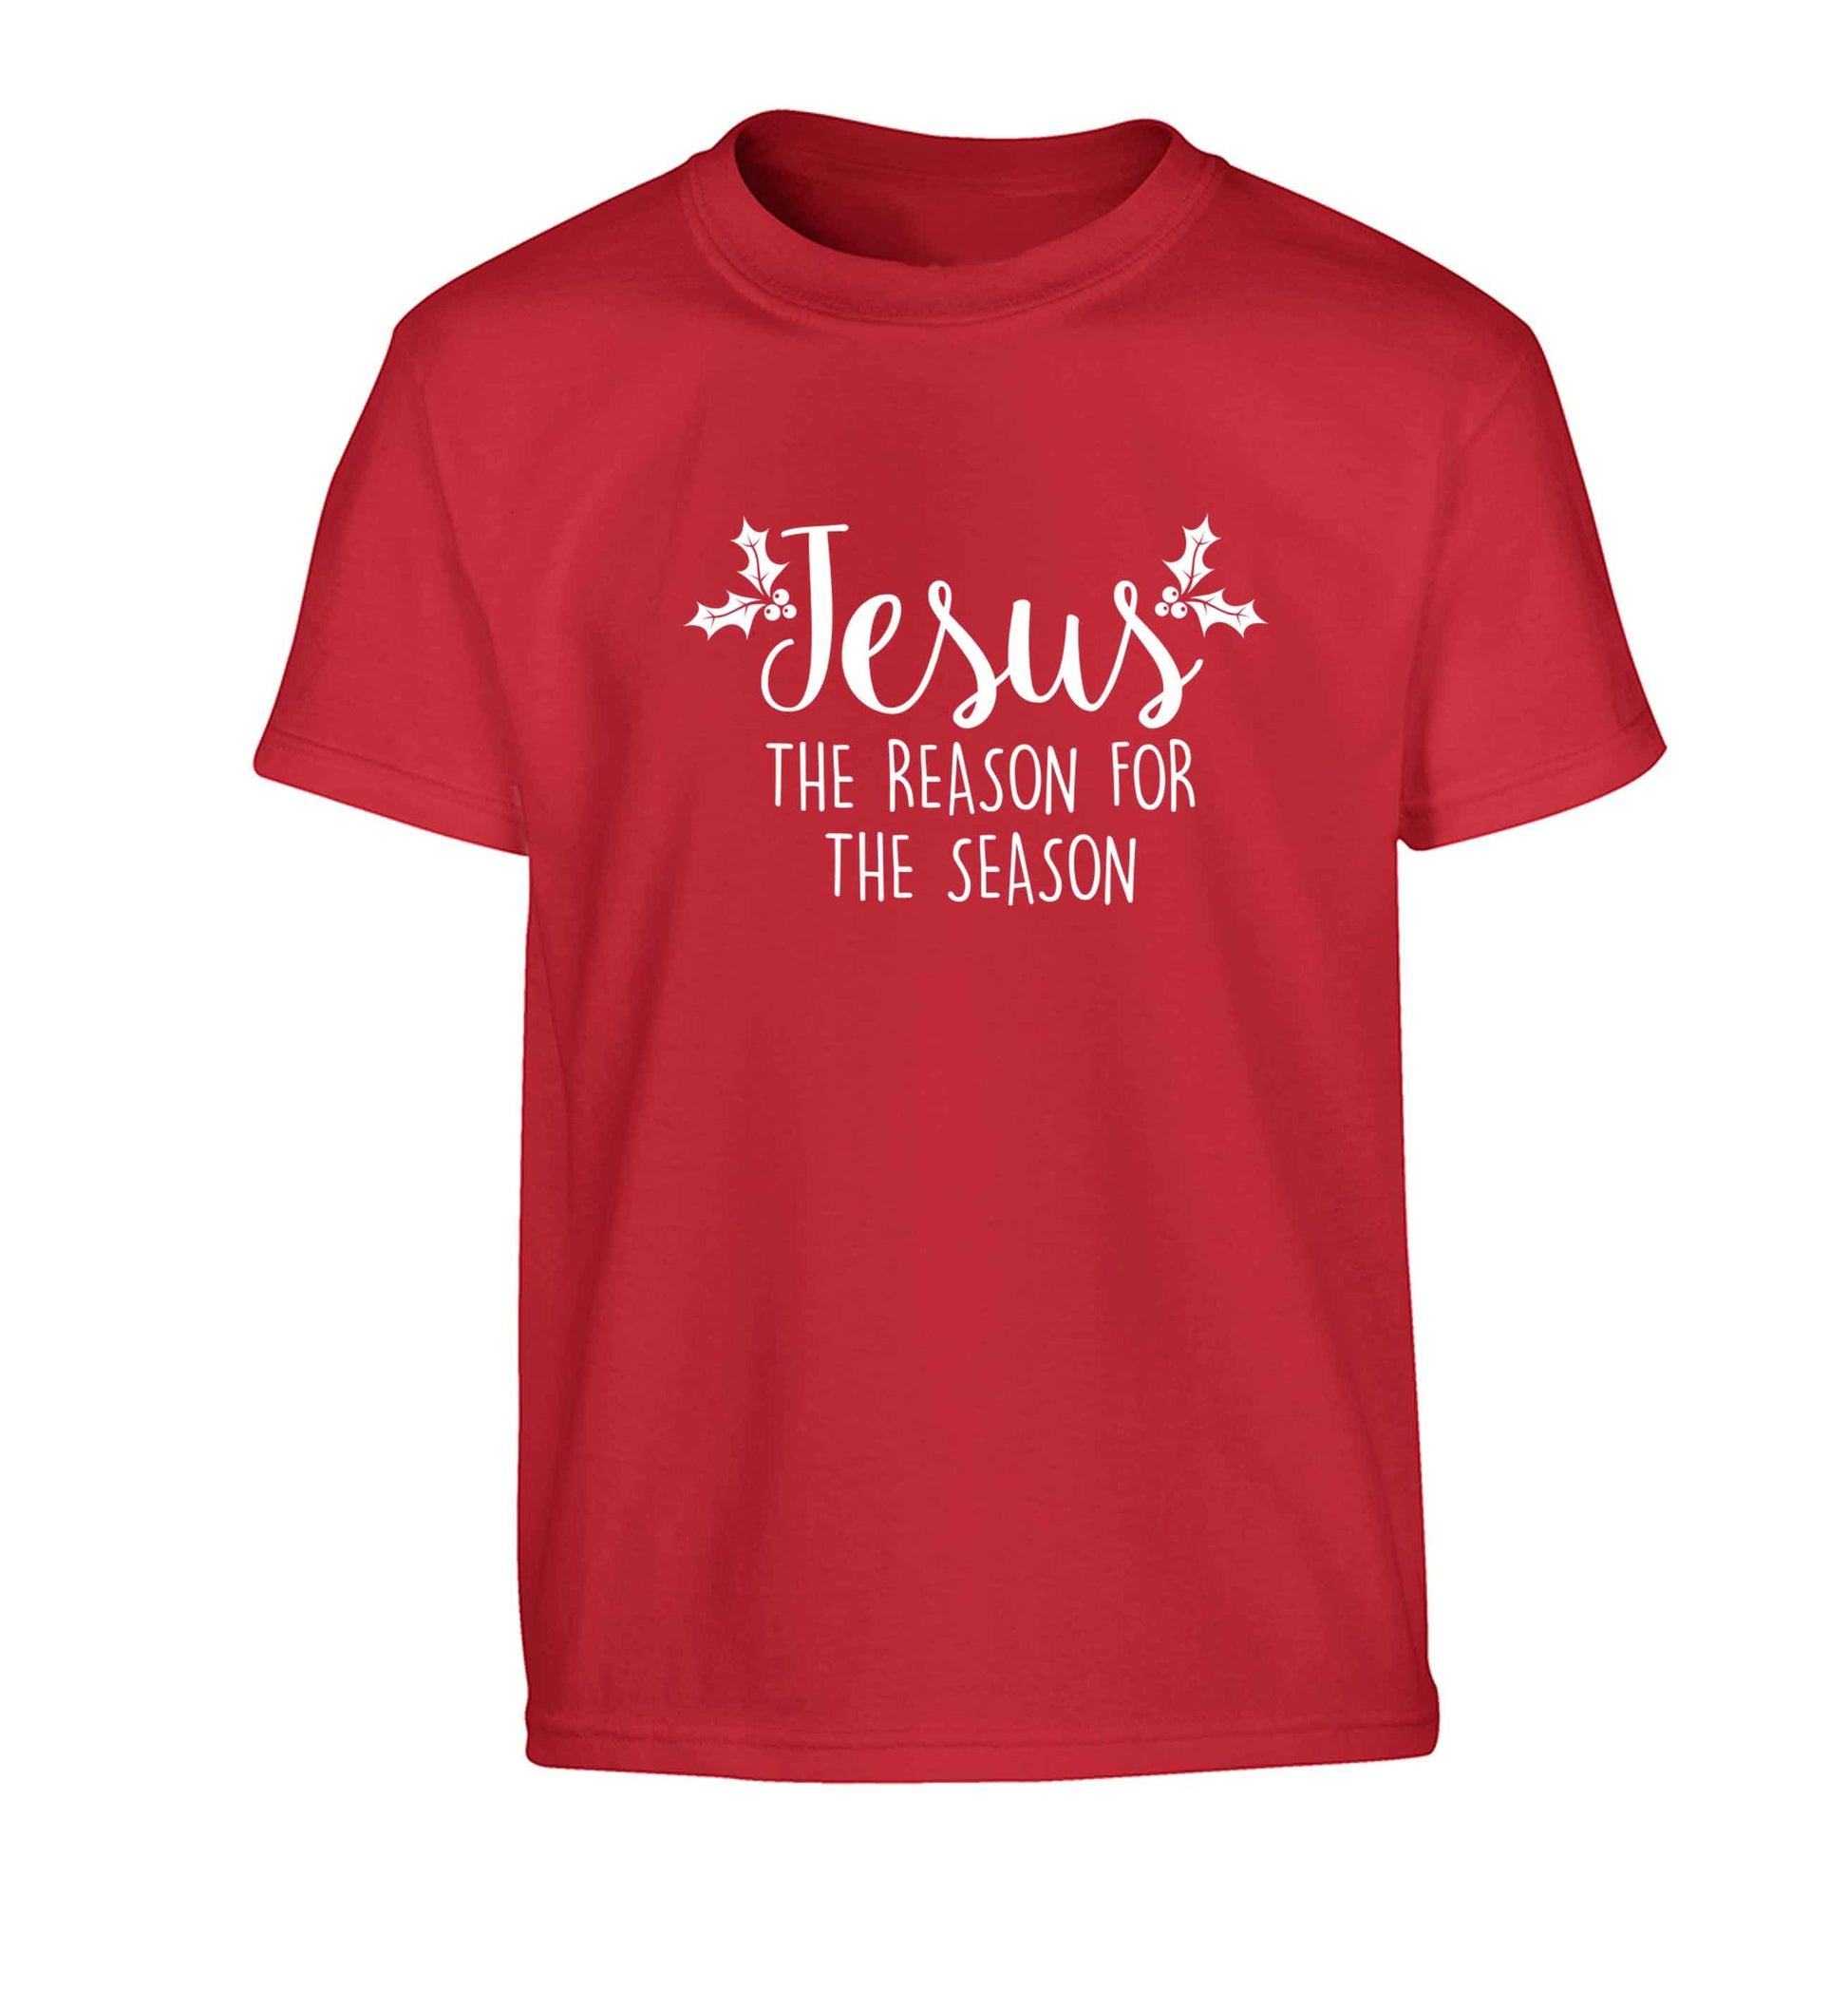 Jesus the reason for the season Children's red Tshirt 12-13 Years